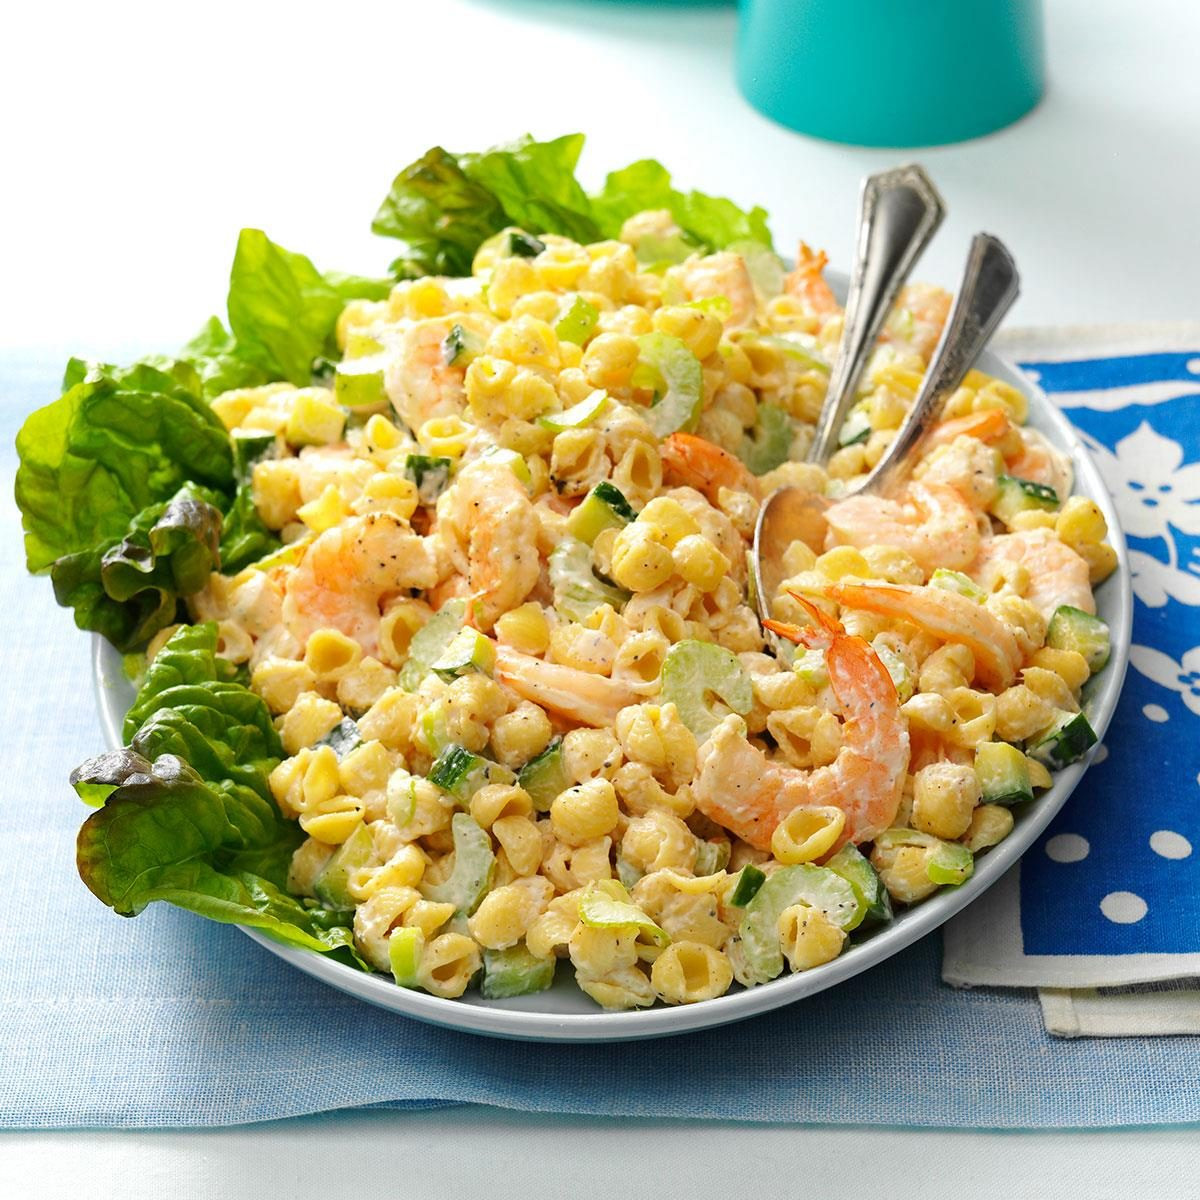 Seafood Salad Recipe With Pasta
 Chilled Shrimp Pasta Salad Recipe